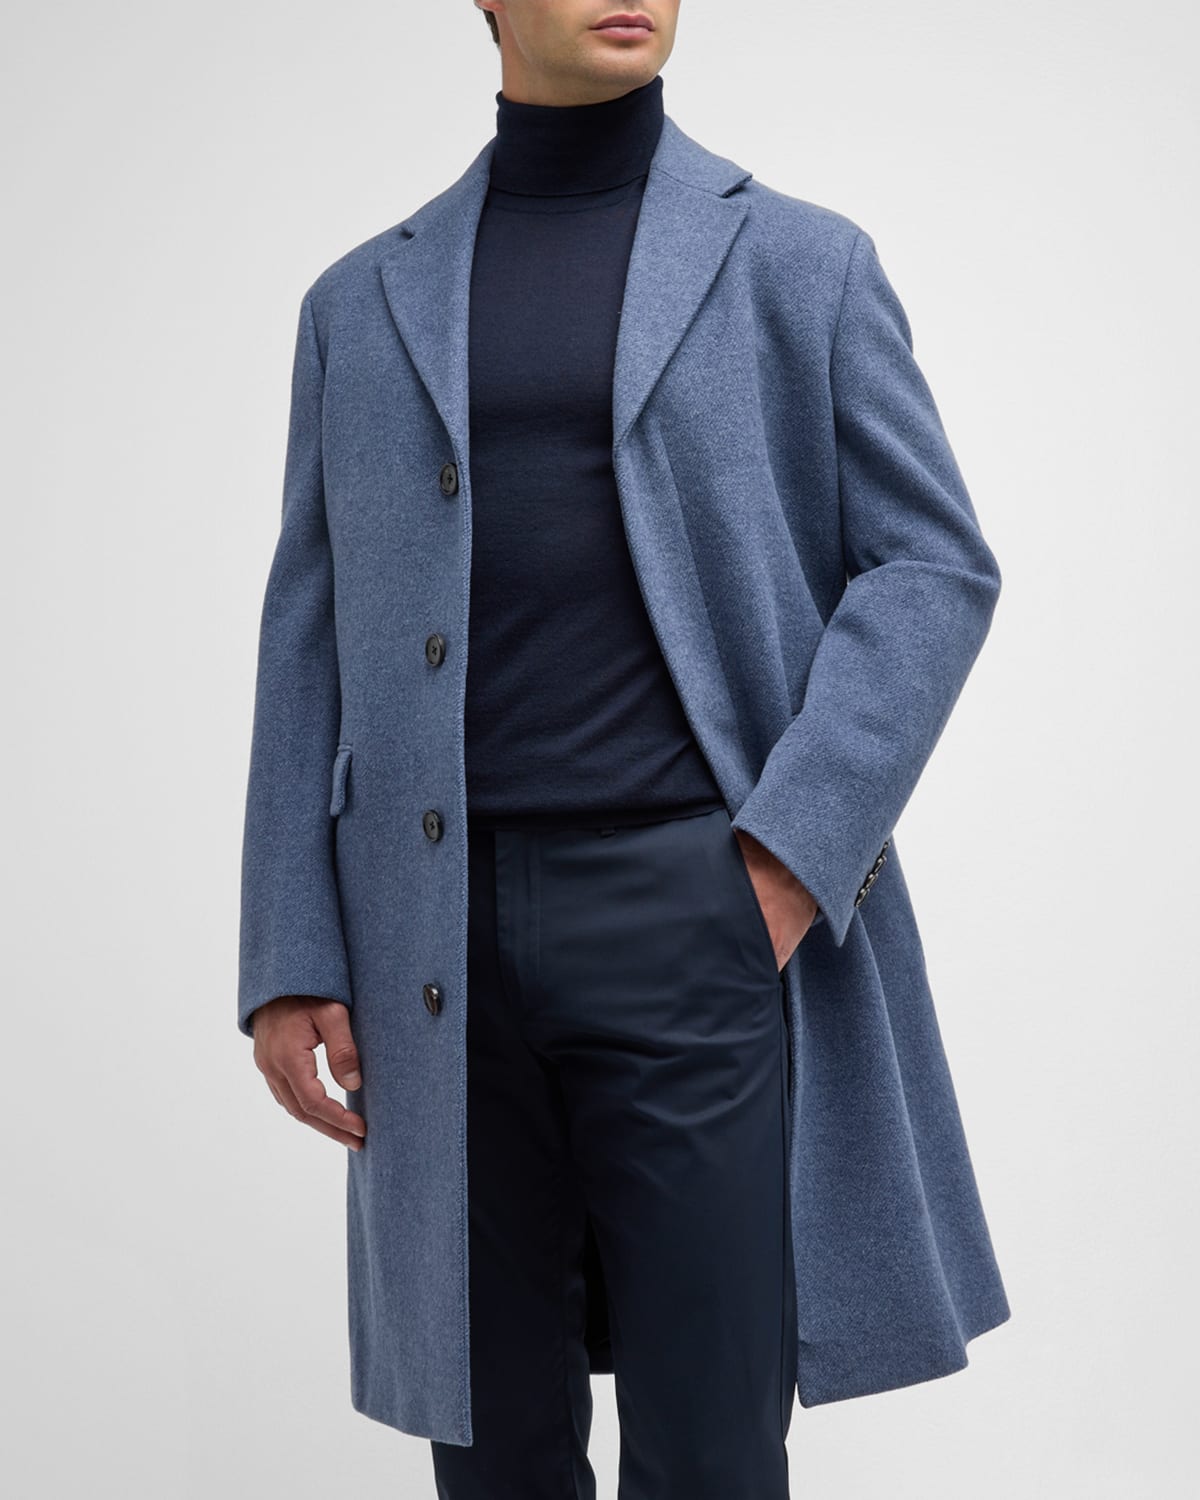 Men's Mercer Classic Wool-Blend Topcoat